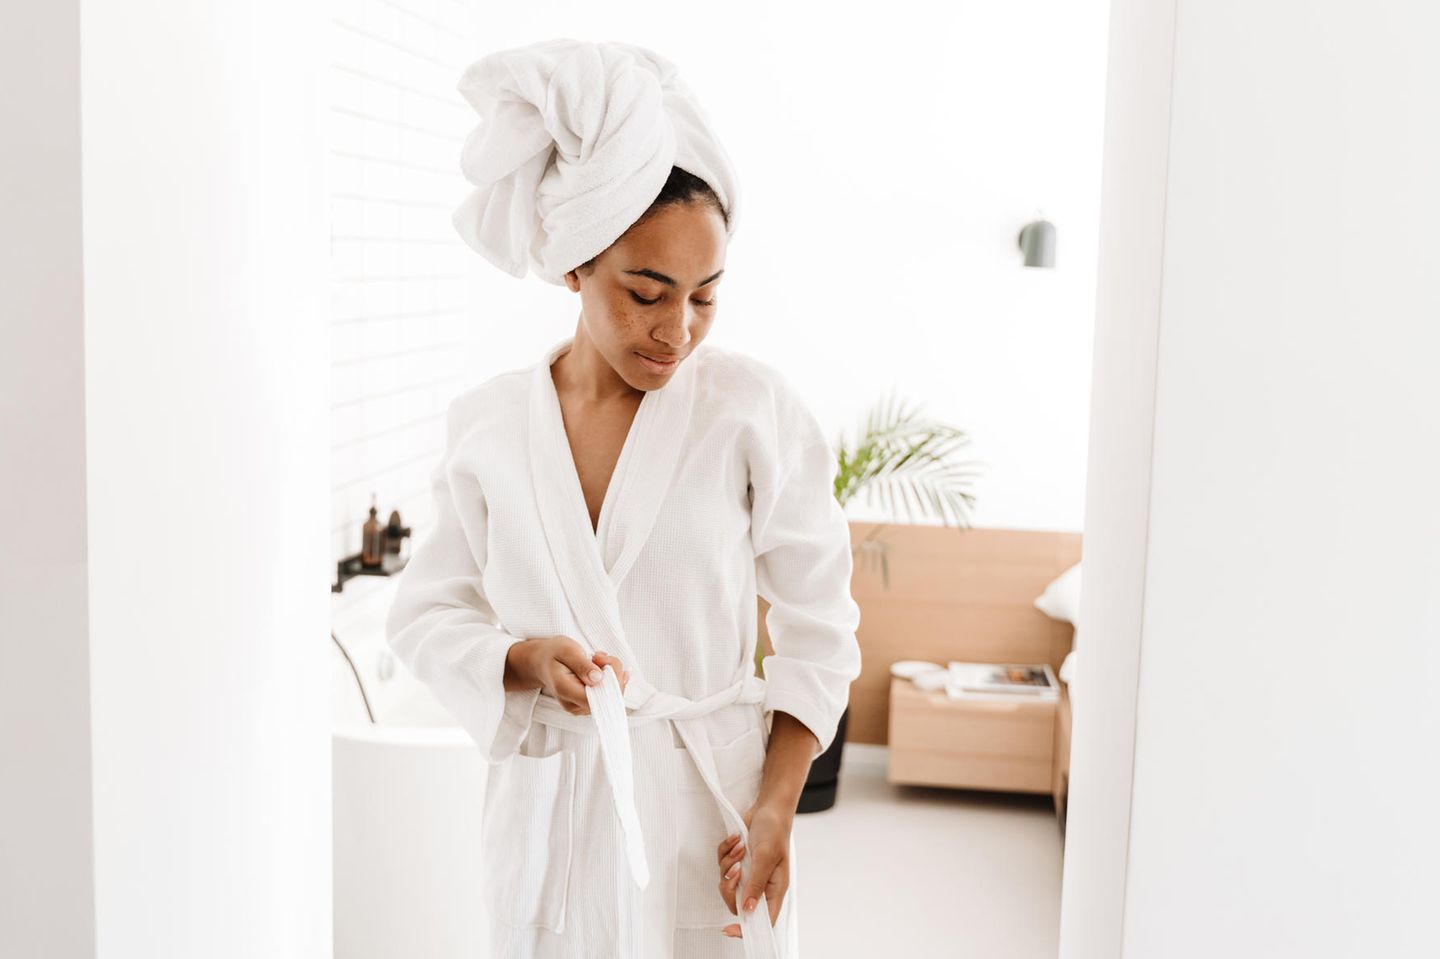 Intimate hygiene: woman ties her bathrobe in the bathroom